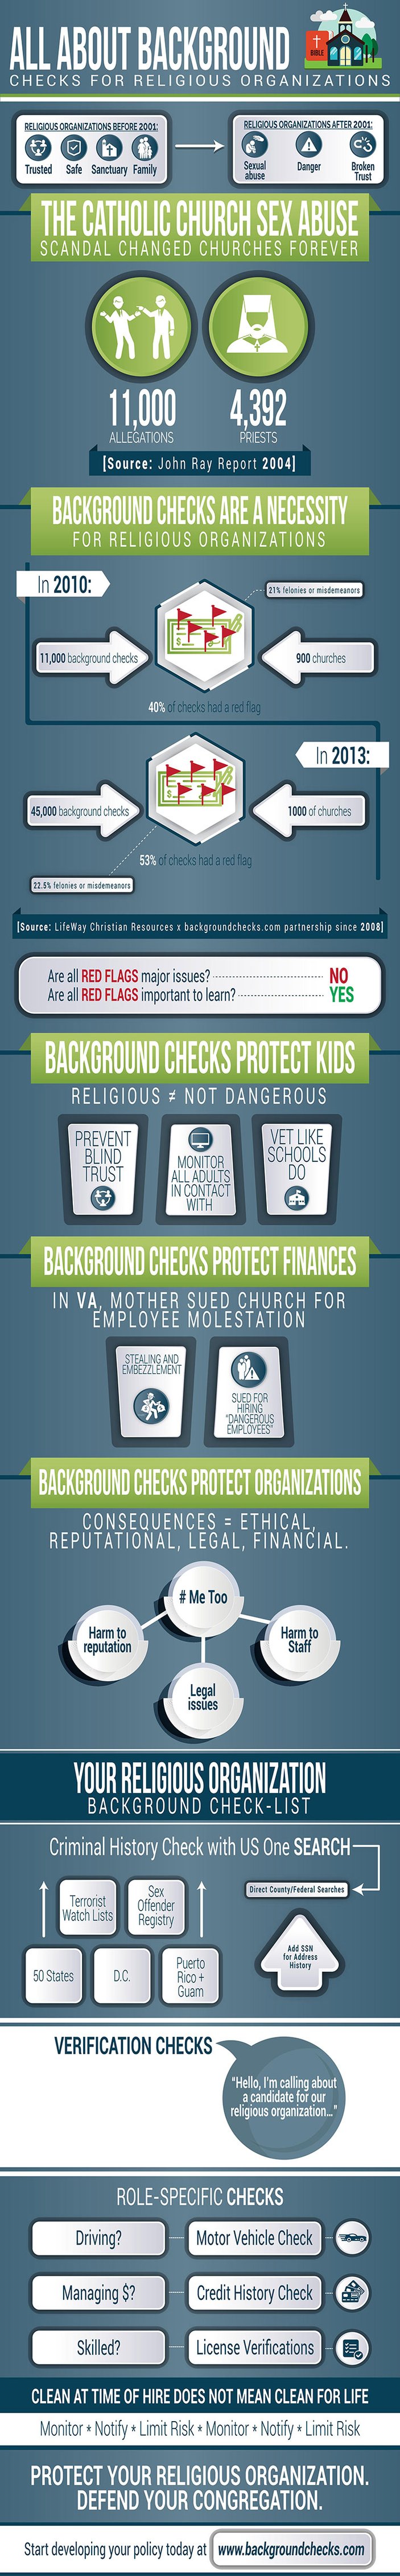 Religious-Organizations-infographic-optimized